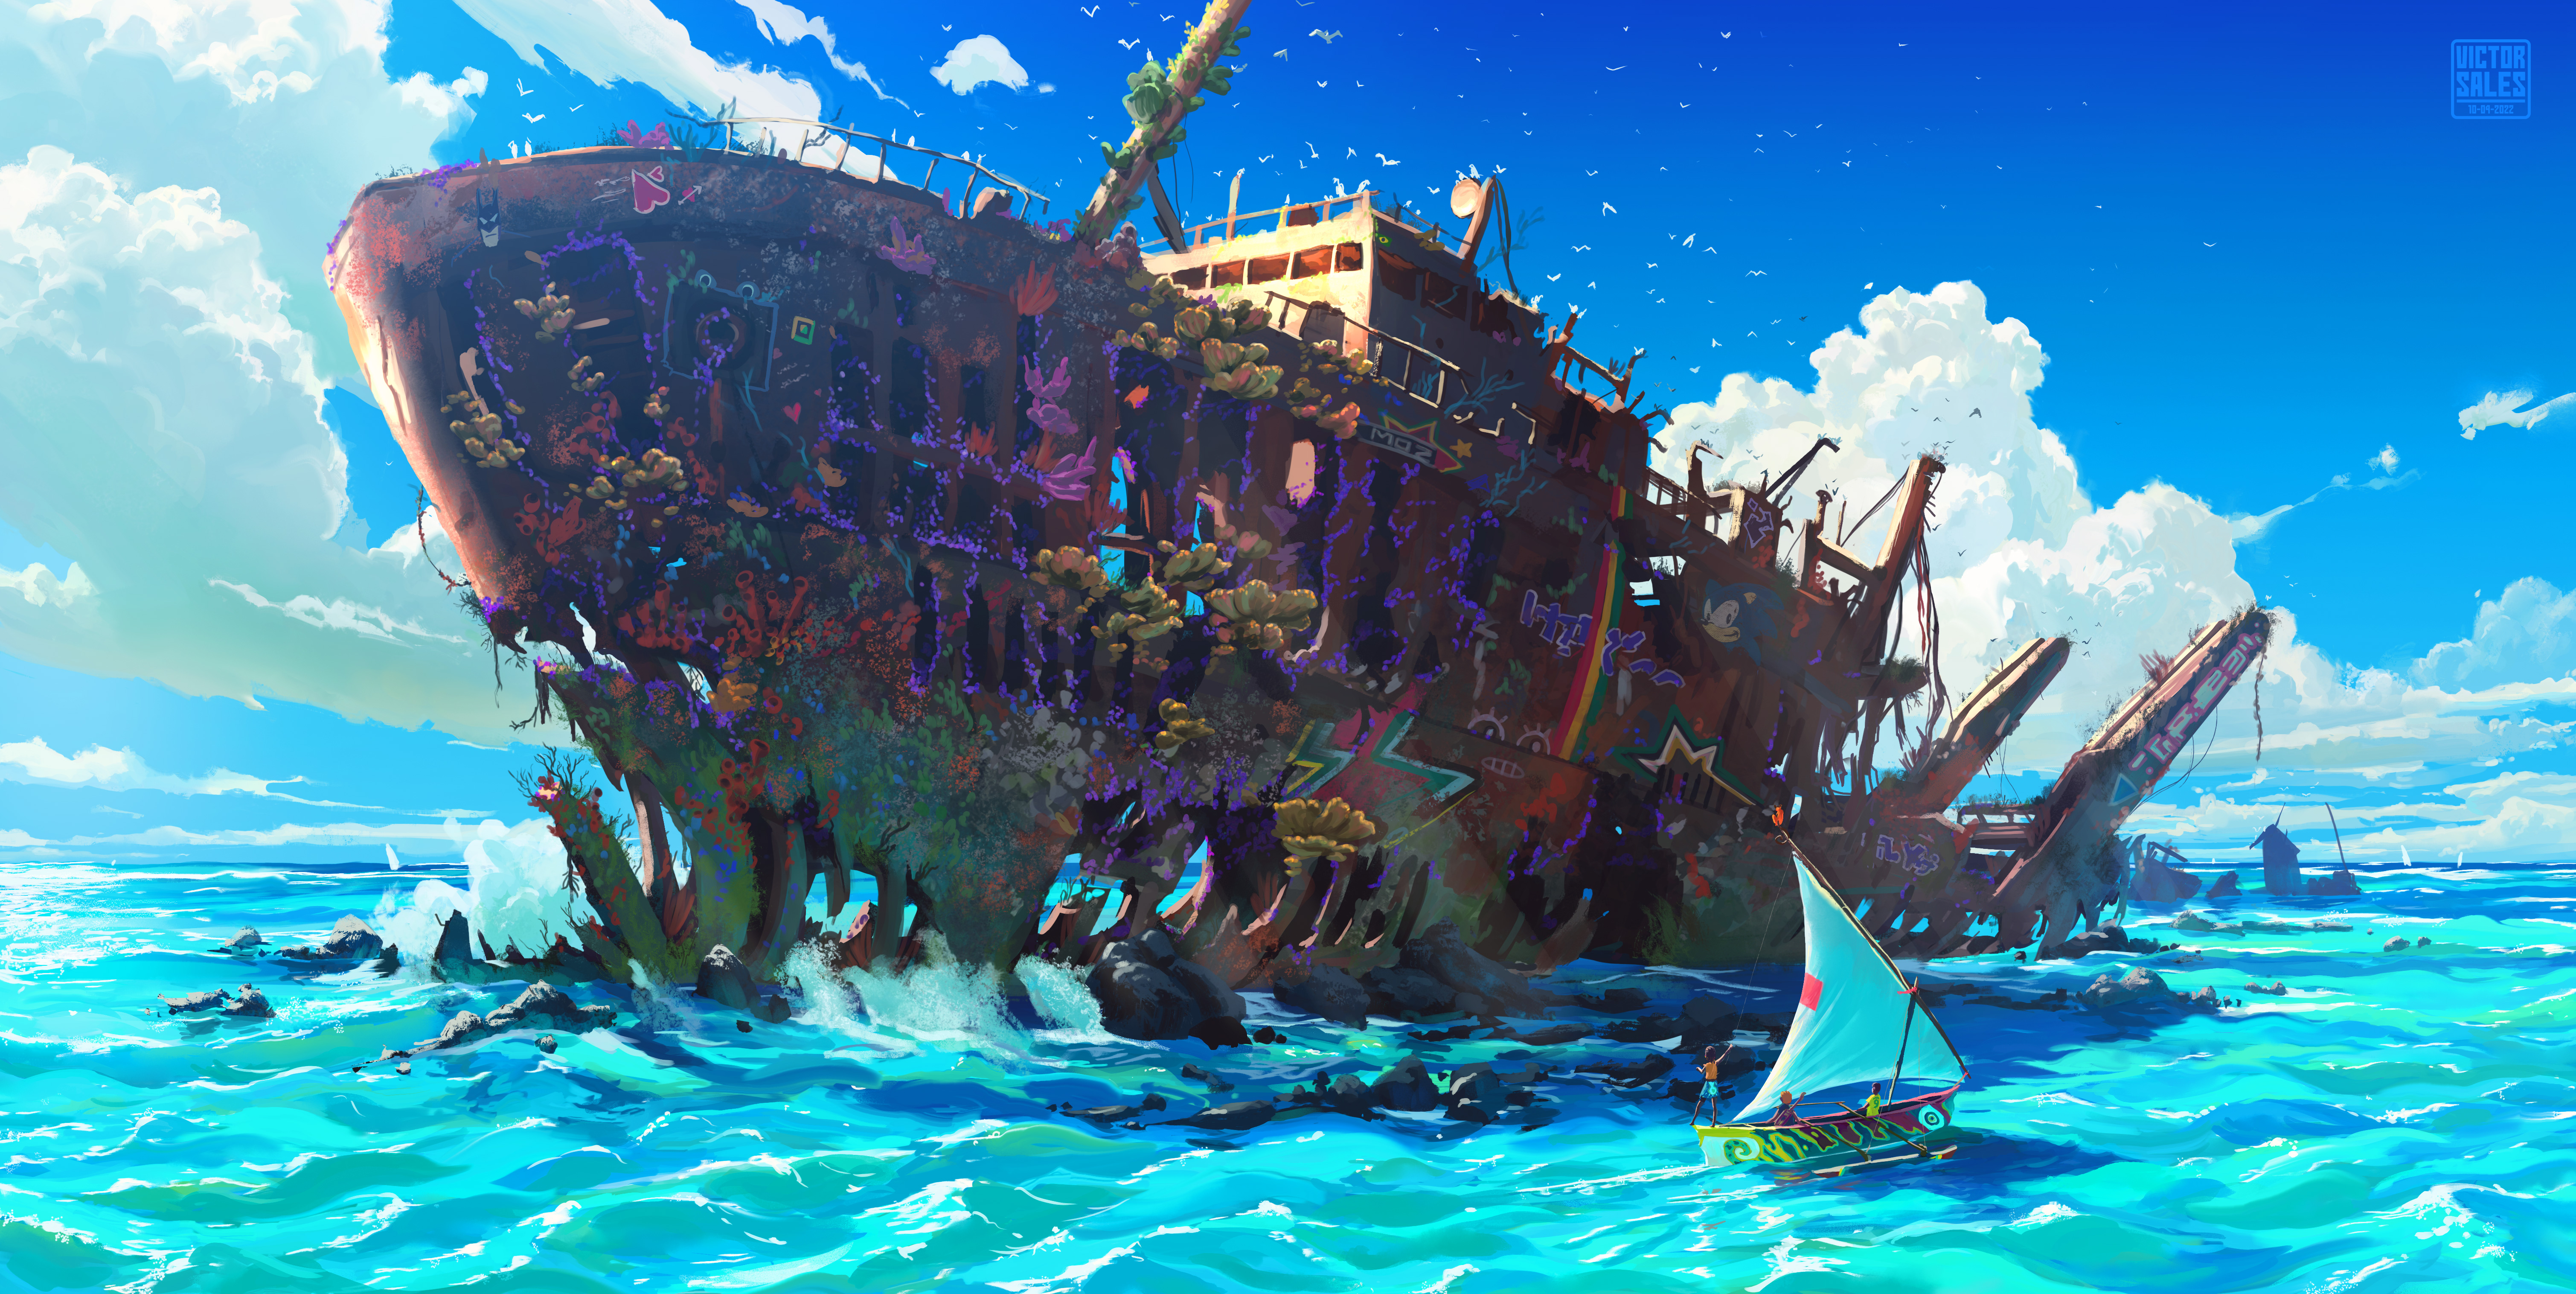 VSales Digital Art Artwork Illustration Landscape Sea Water Boat Clouds Ruins Sky Shipwreck Sailing  6038x3032